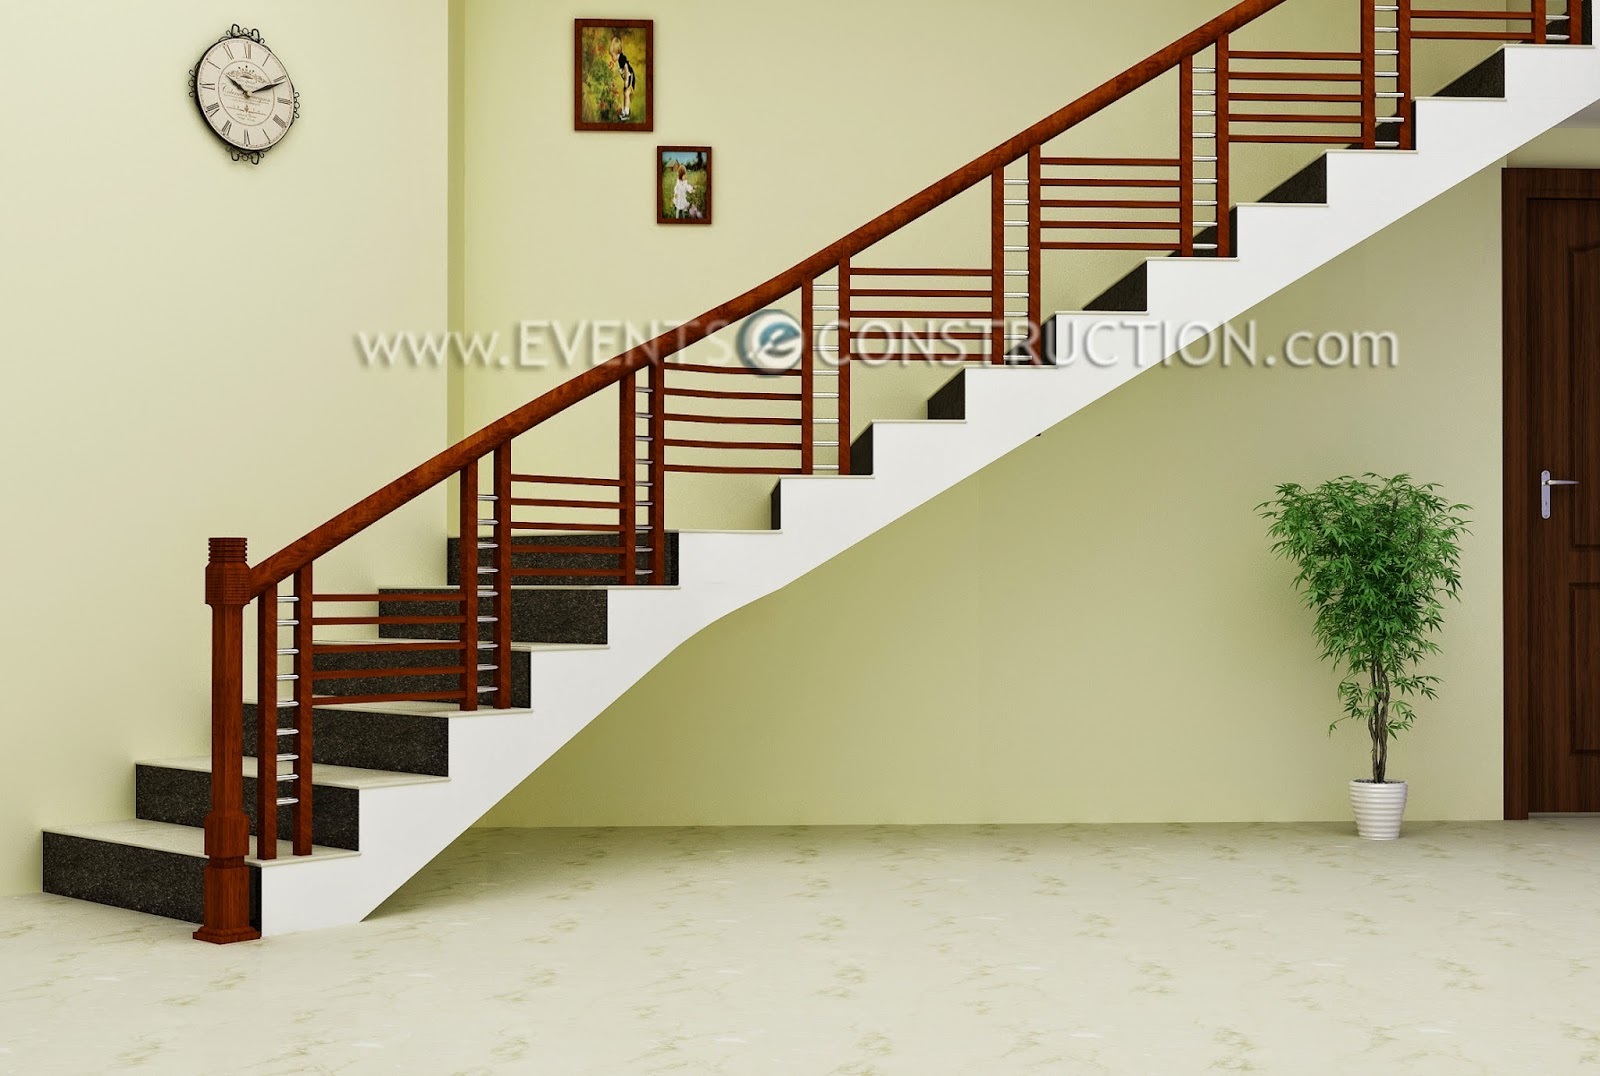 Evens Construction Pvt Ltd simple  wooden staircase design 